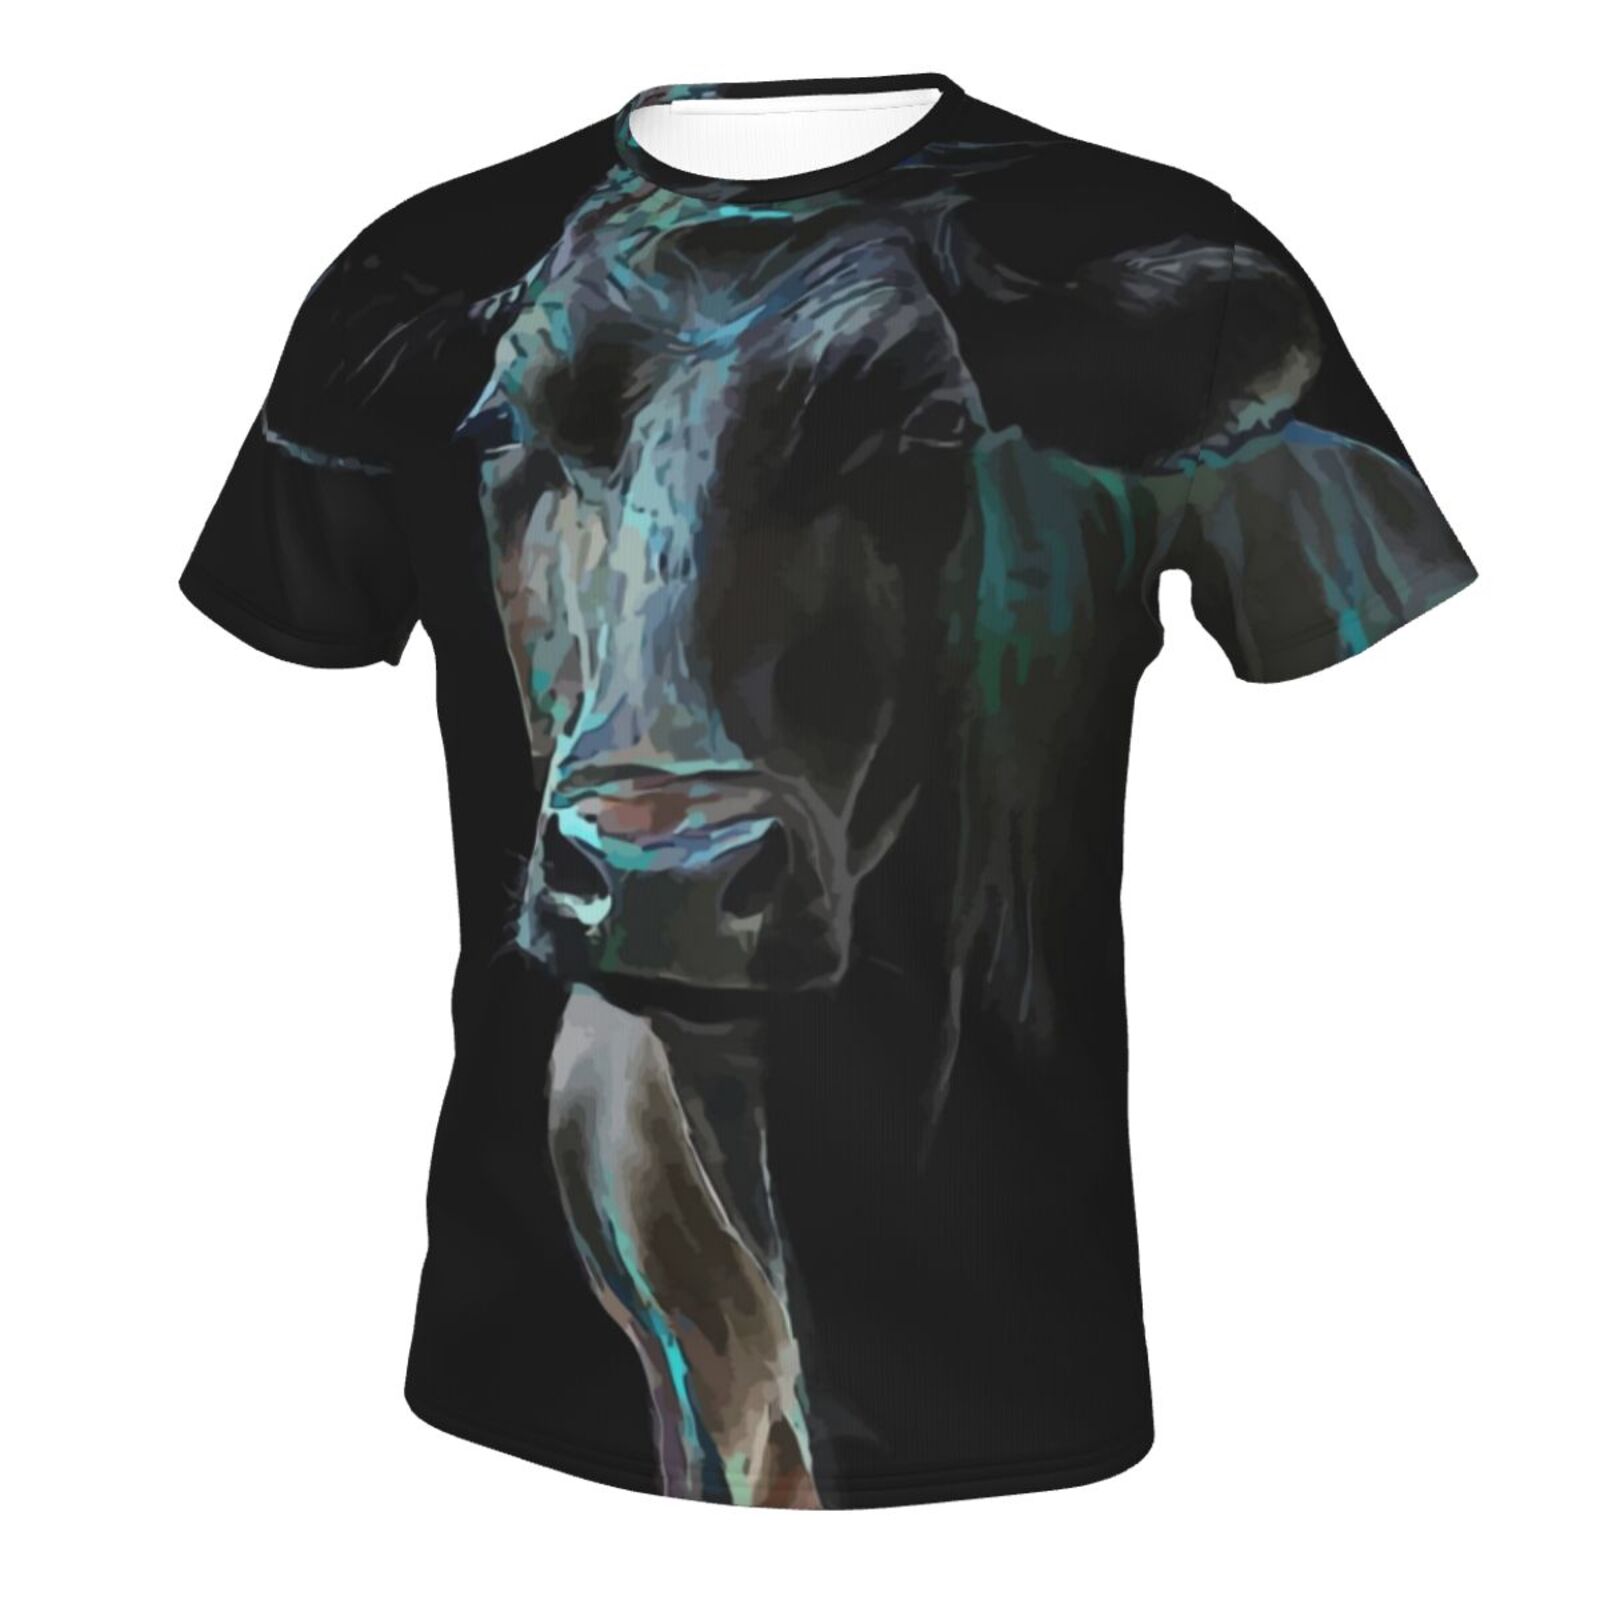 Vaca Premium Blandet Medieelementer Klassisk T-shirt